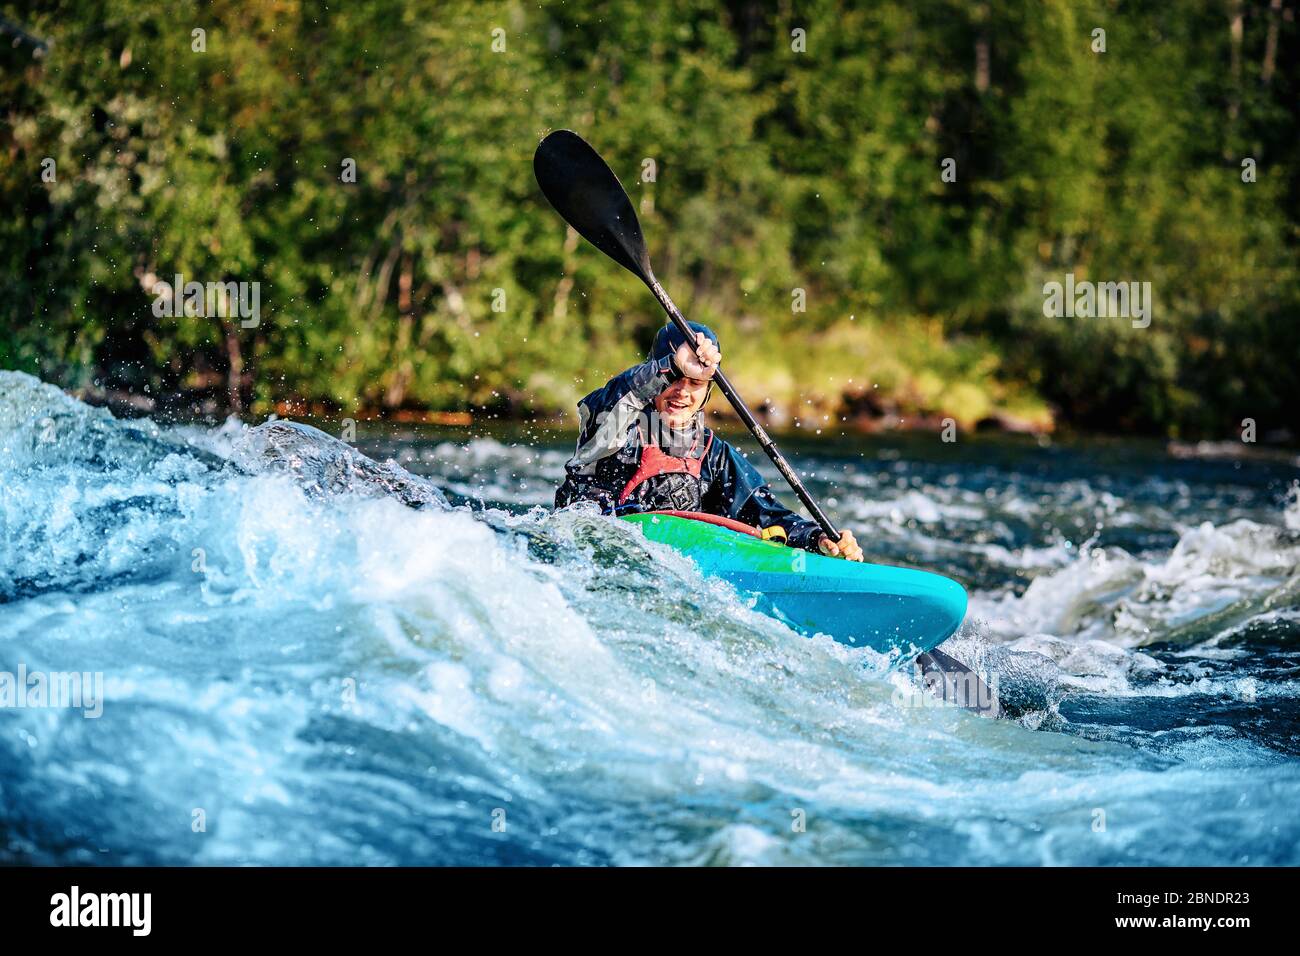 Extremsport Rafting Wildwasser Kajakfahren. Kerl im Kajak segelt Bergfluss Stockfoto